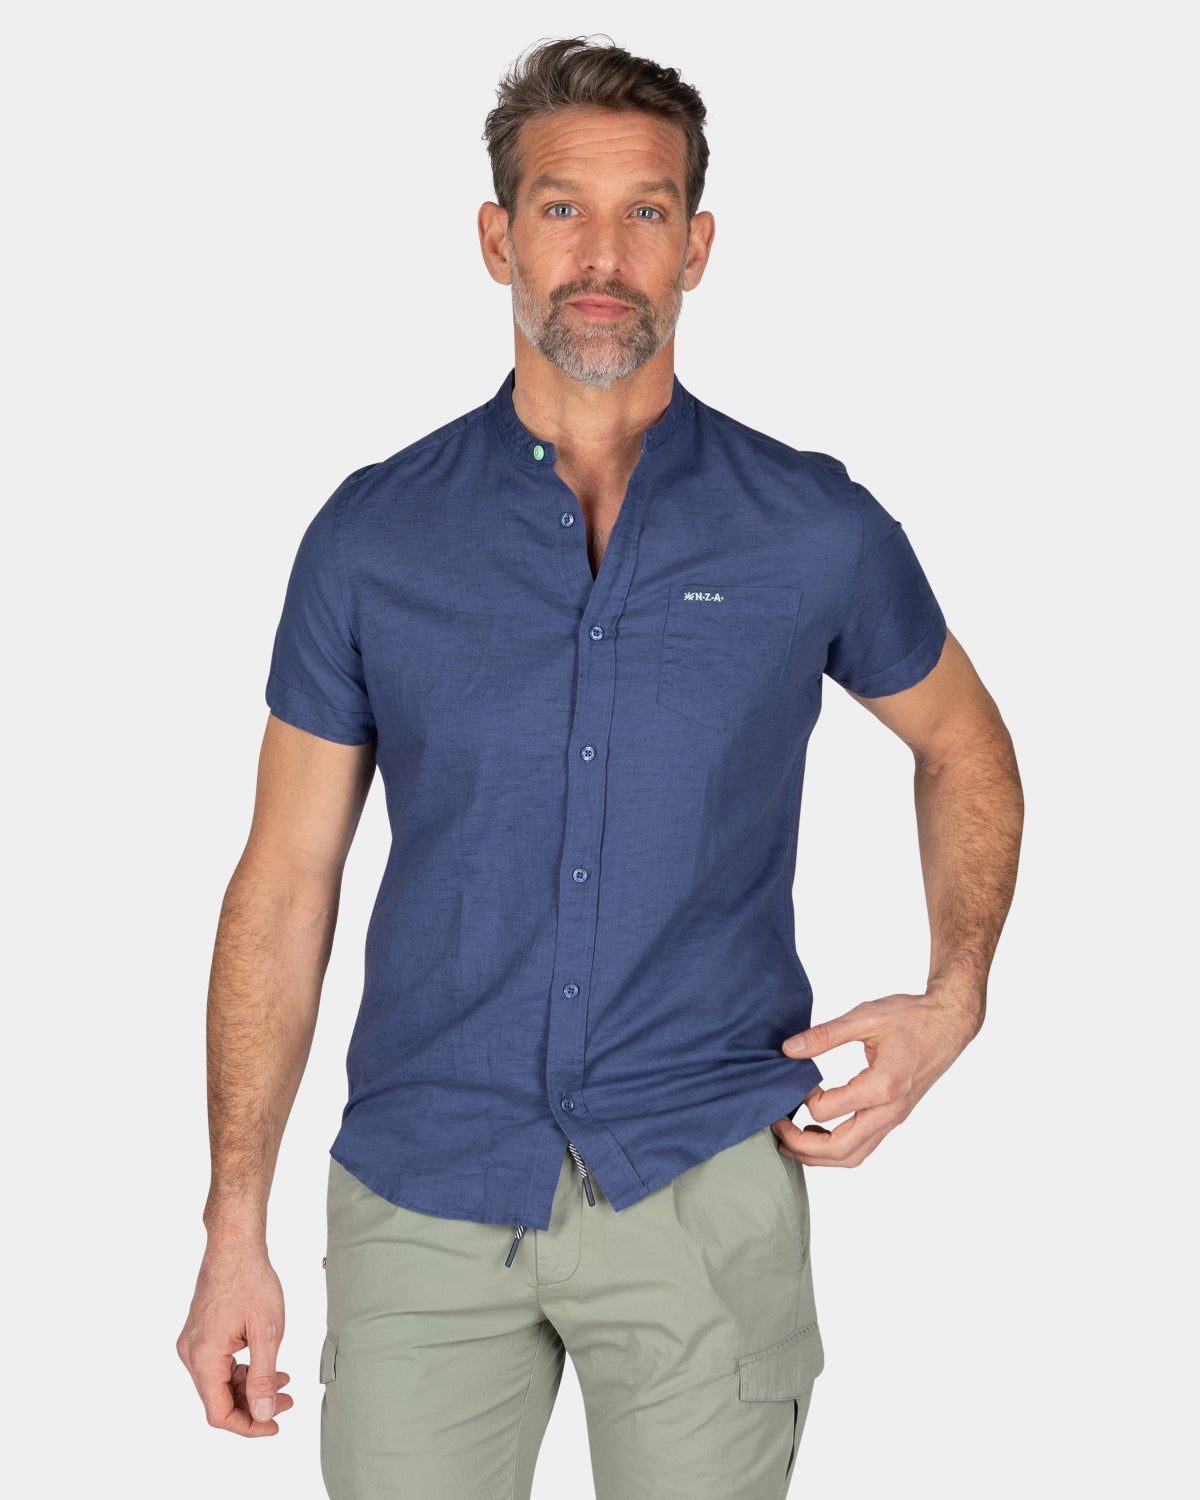 Collarless shirt with short sleeves - Dusk Navy